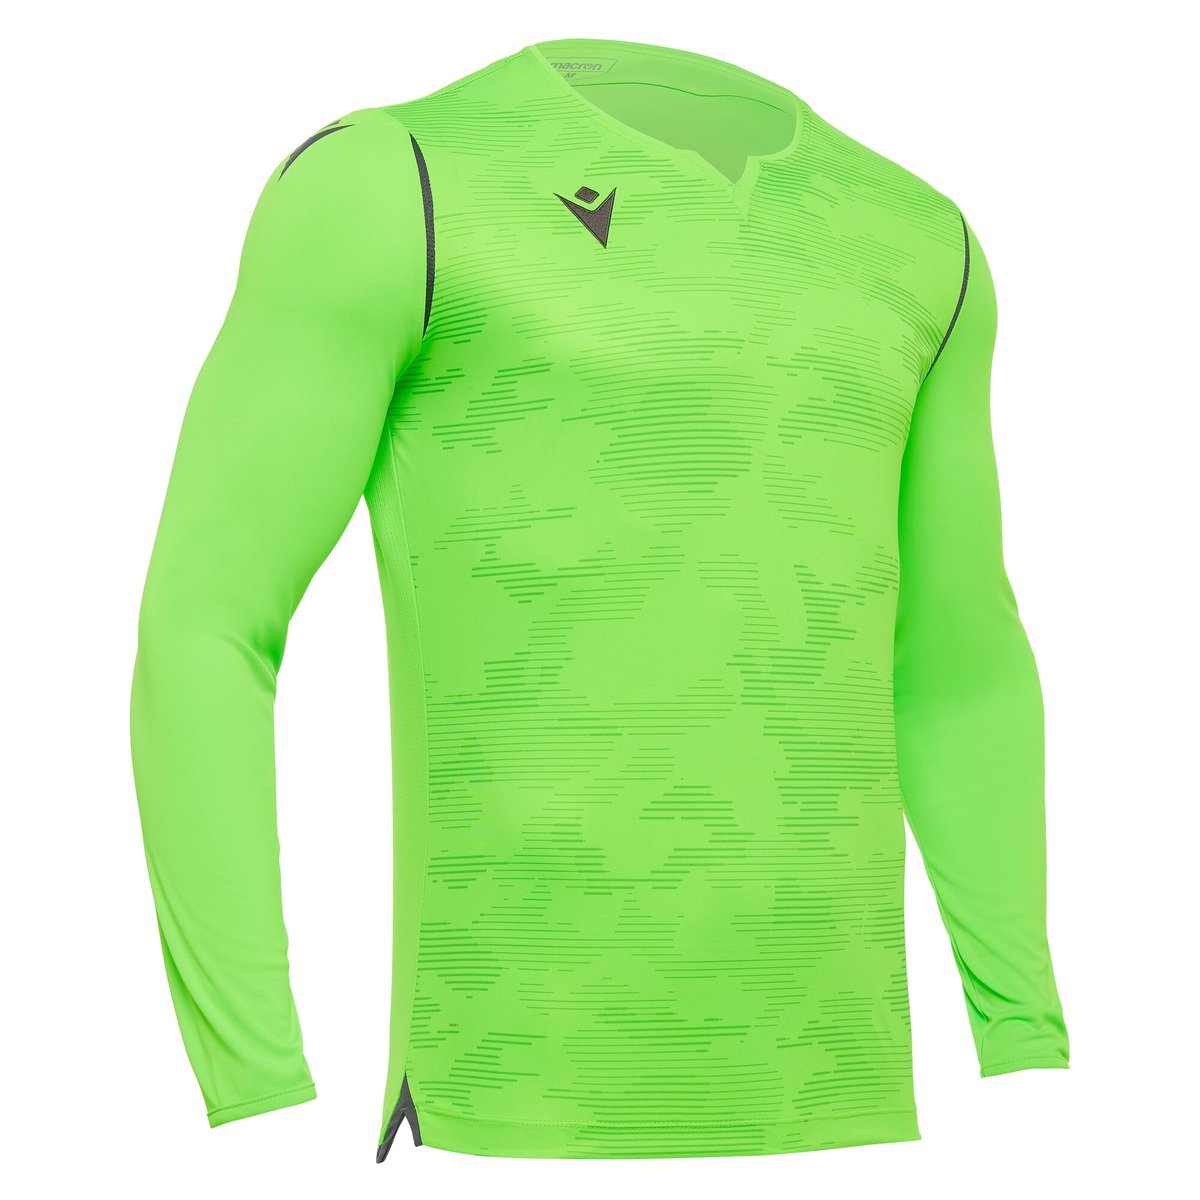 Macron Ares GK Shirt - Neon Green/Anthracite